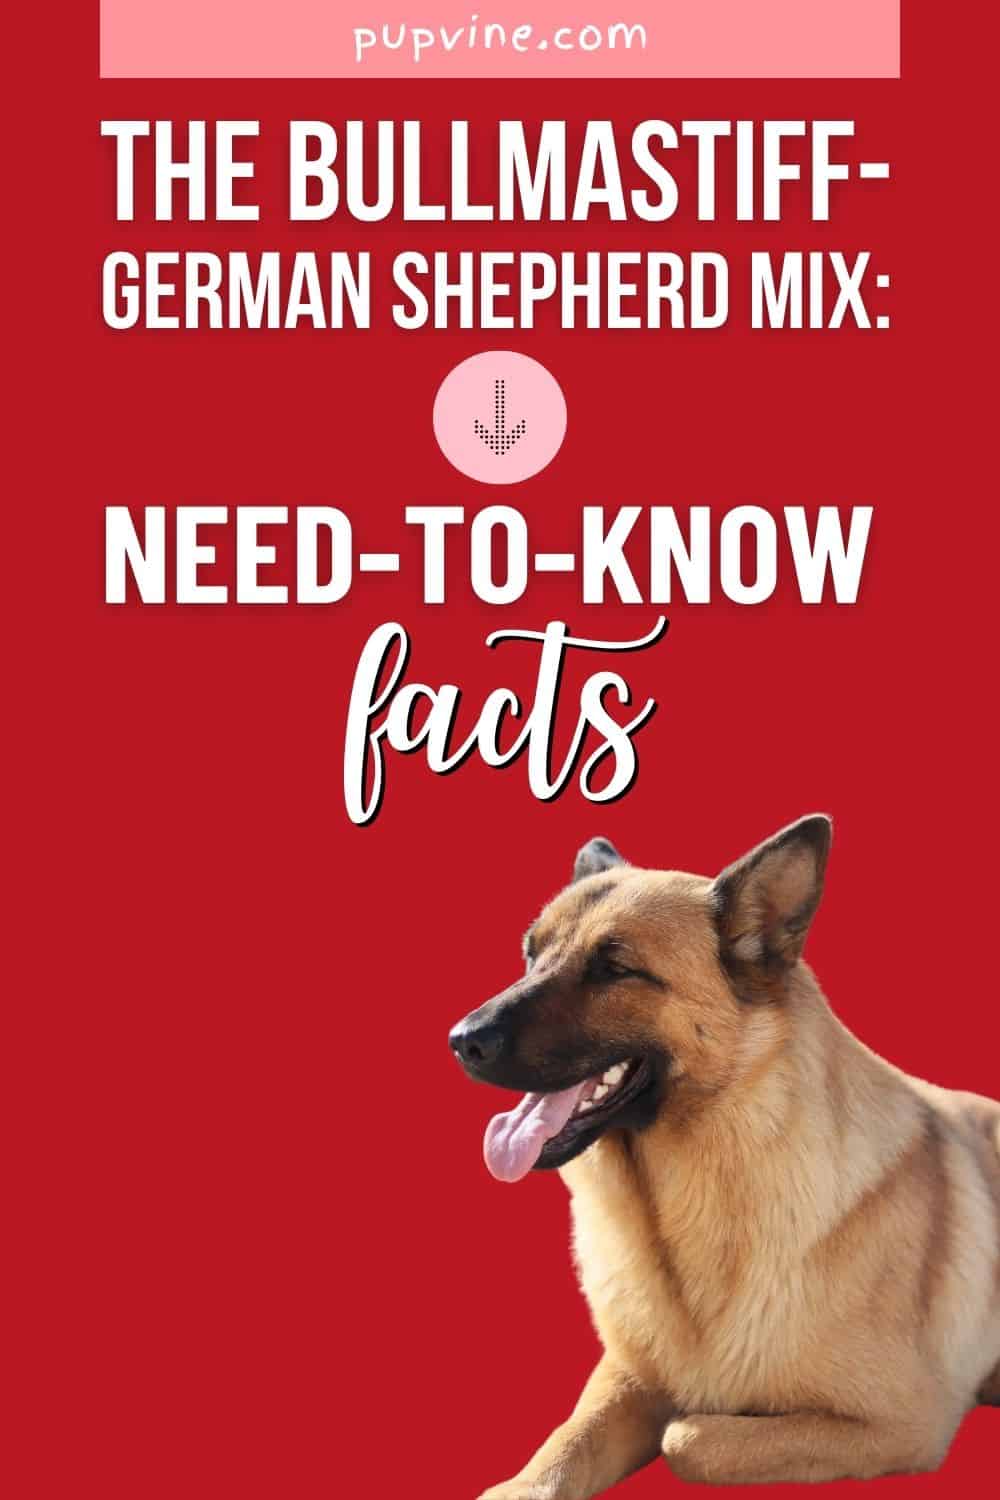 The Bullmastiff - German Shepherd Mix: Need-To-Know Facts